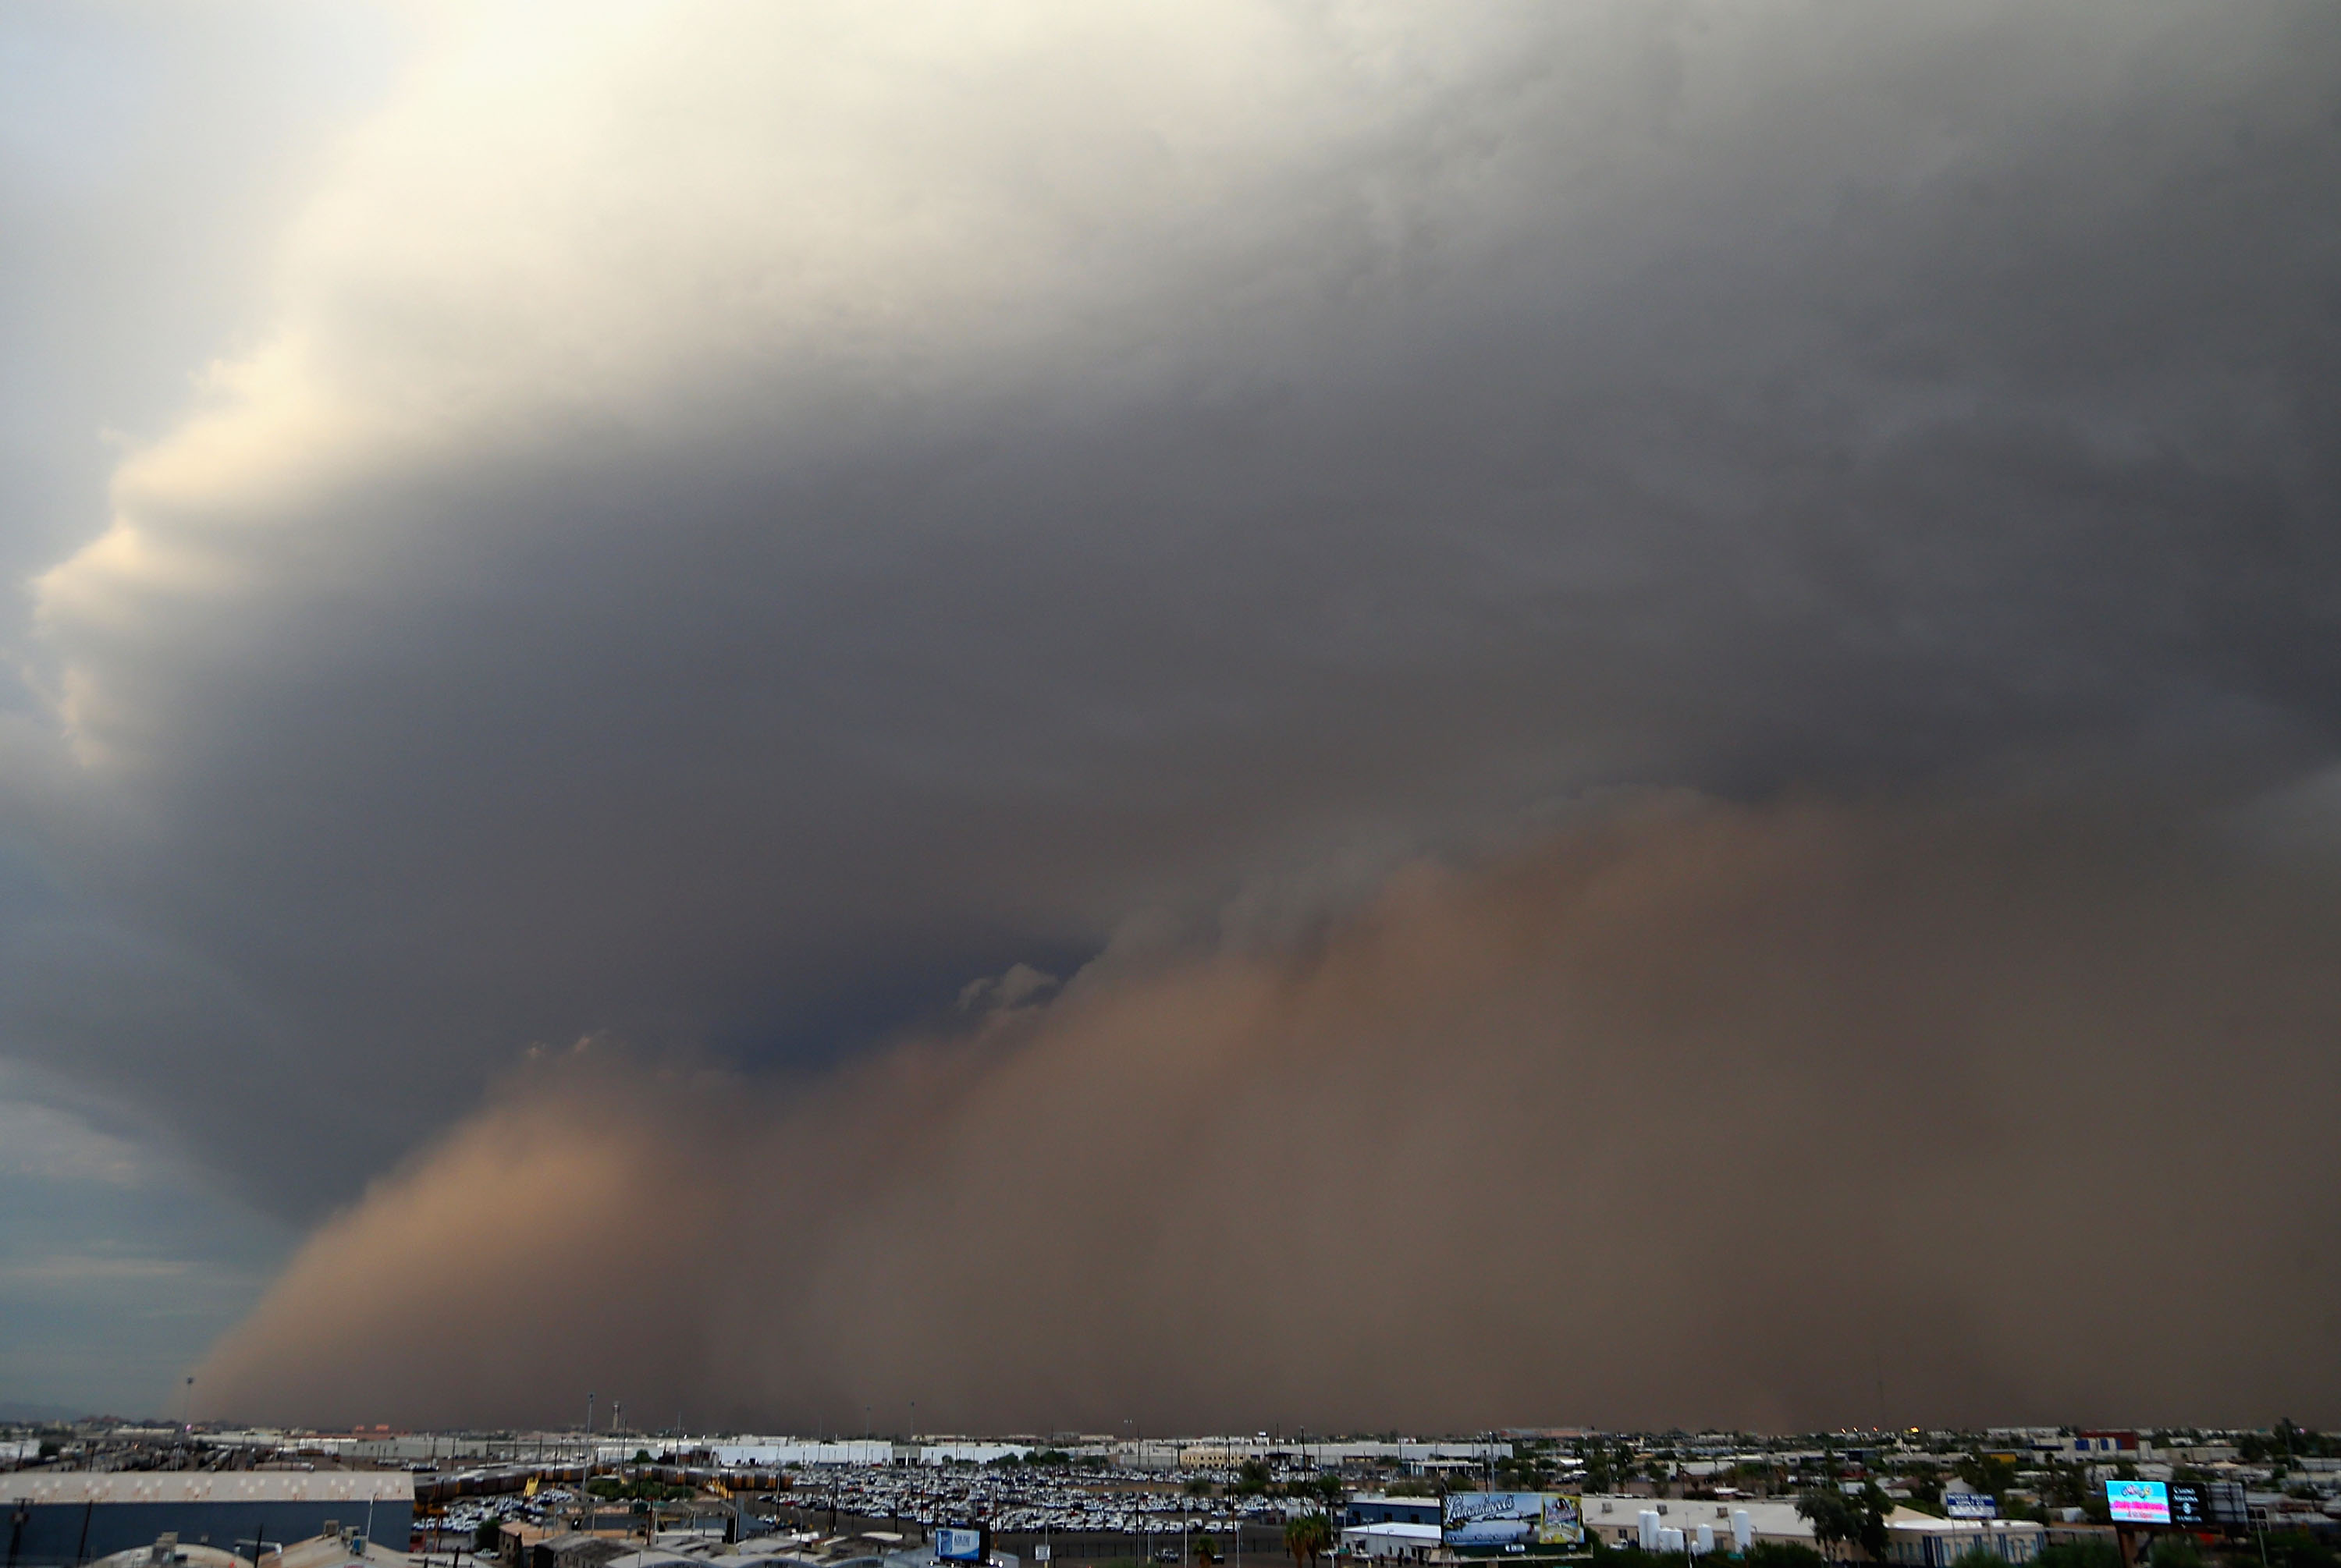 Images Show Dust Storm Sweeping Across Phoenix, Arizona